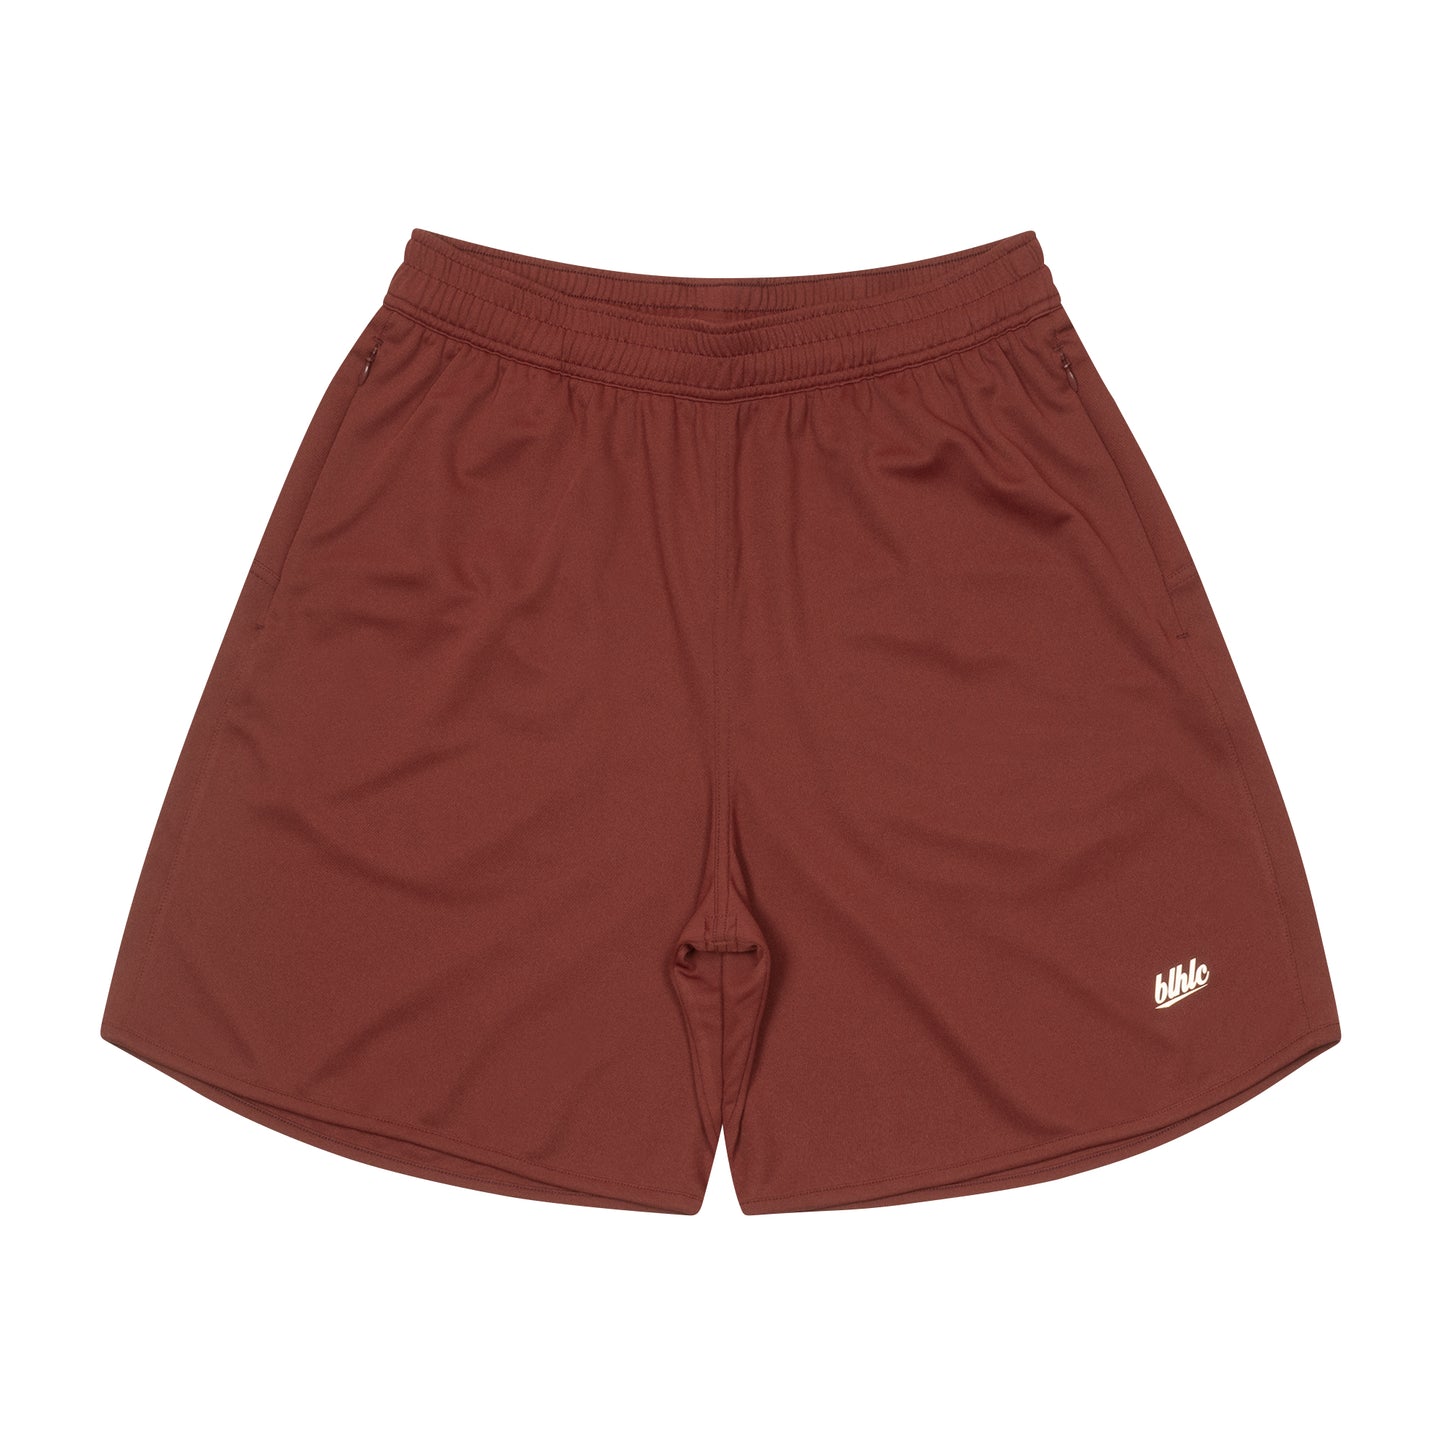 Basic Zip Shorts (barn red/off white)